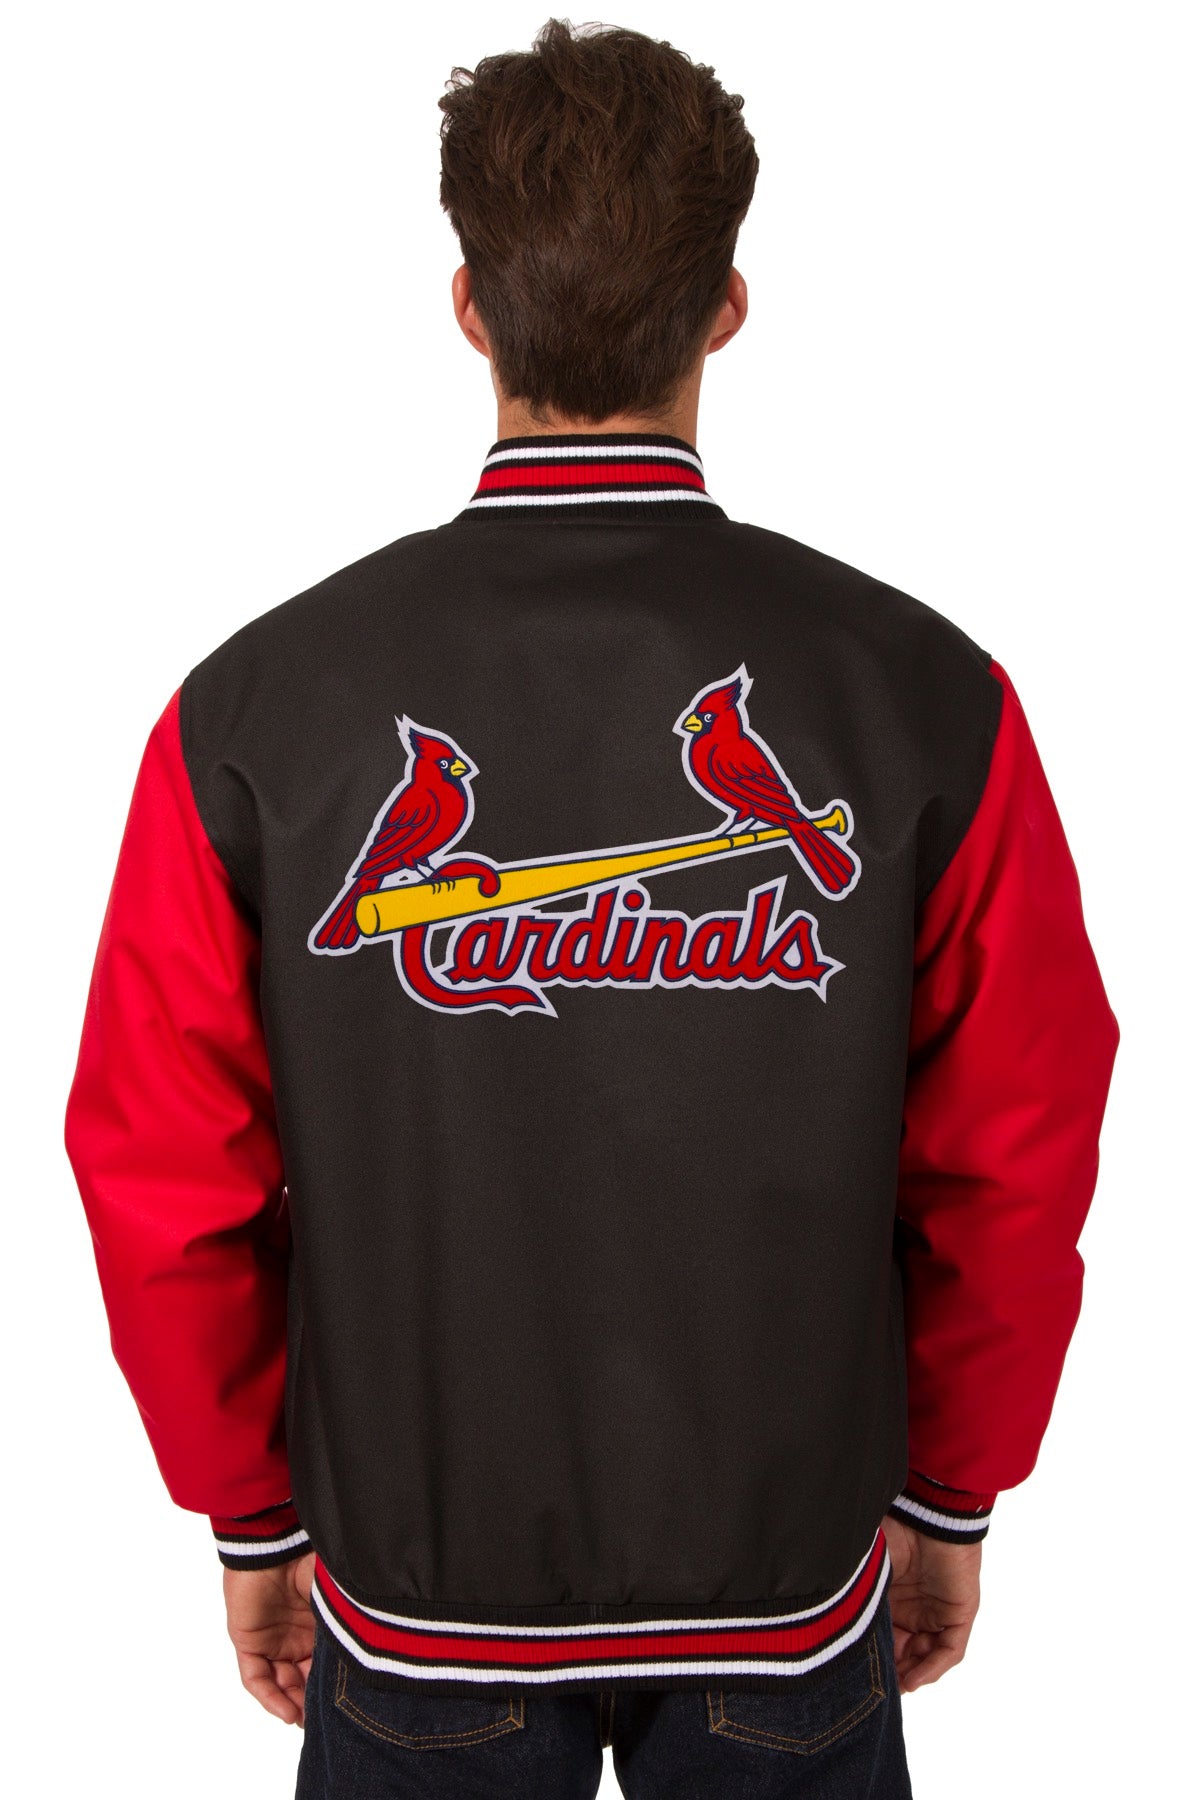 St. Louis Cardinals 2011 World Series Champions - Adult Twill Jacket